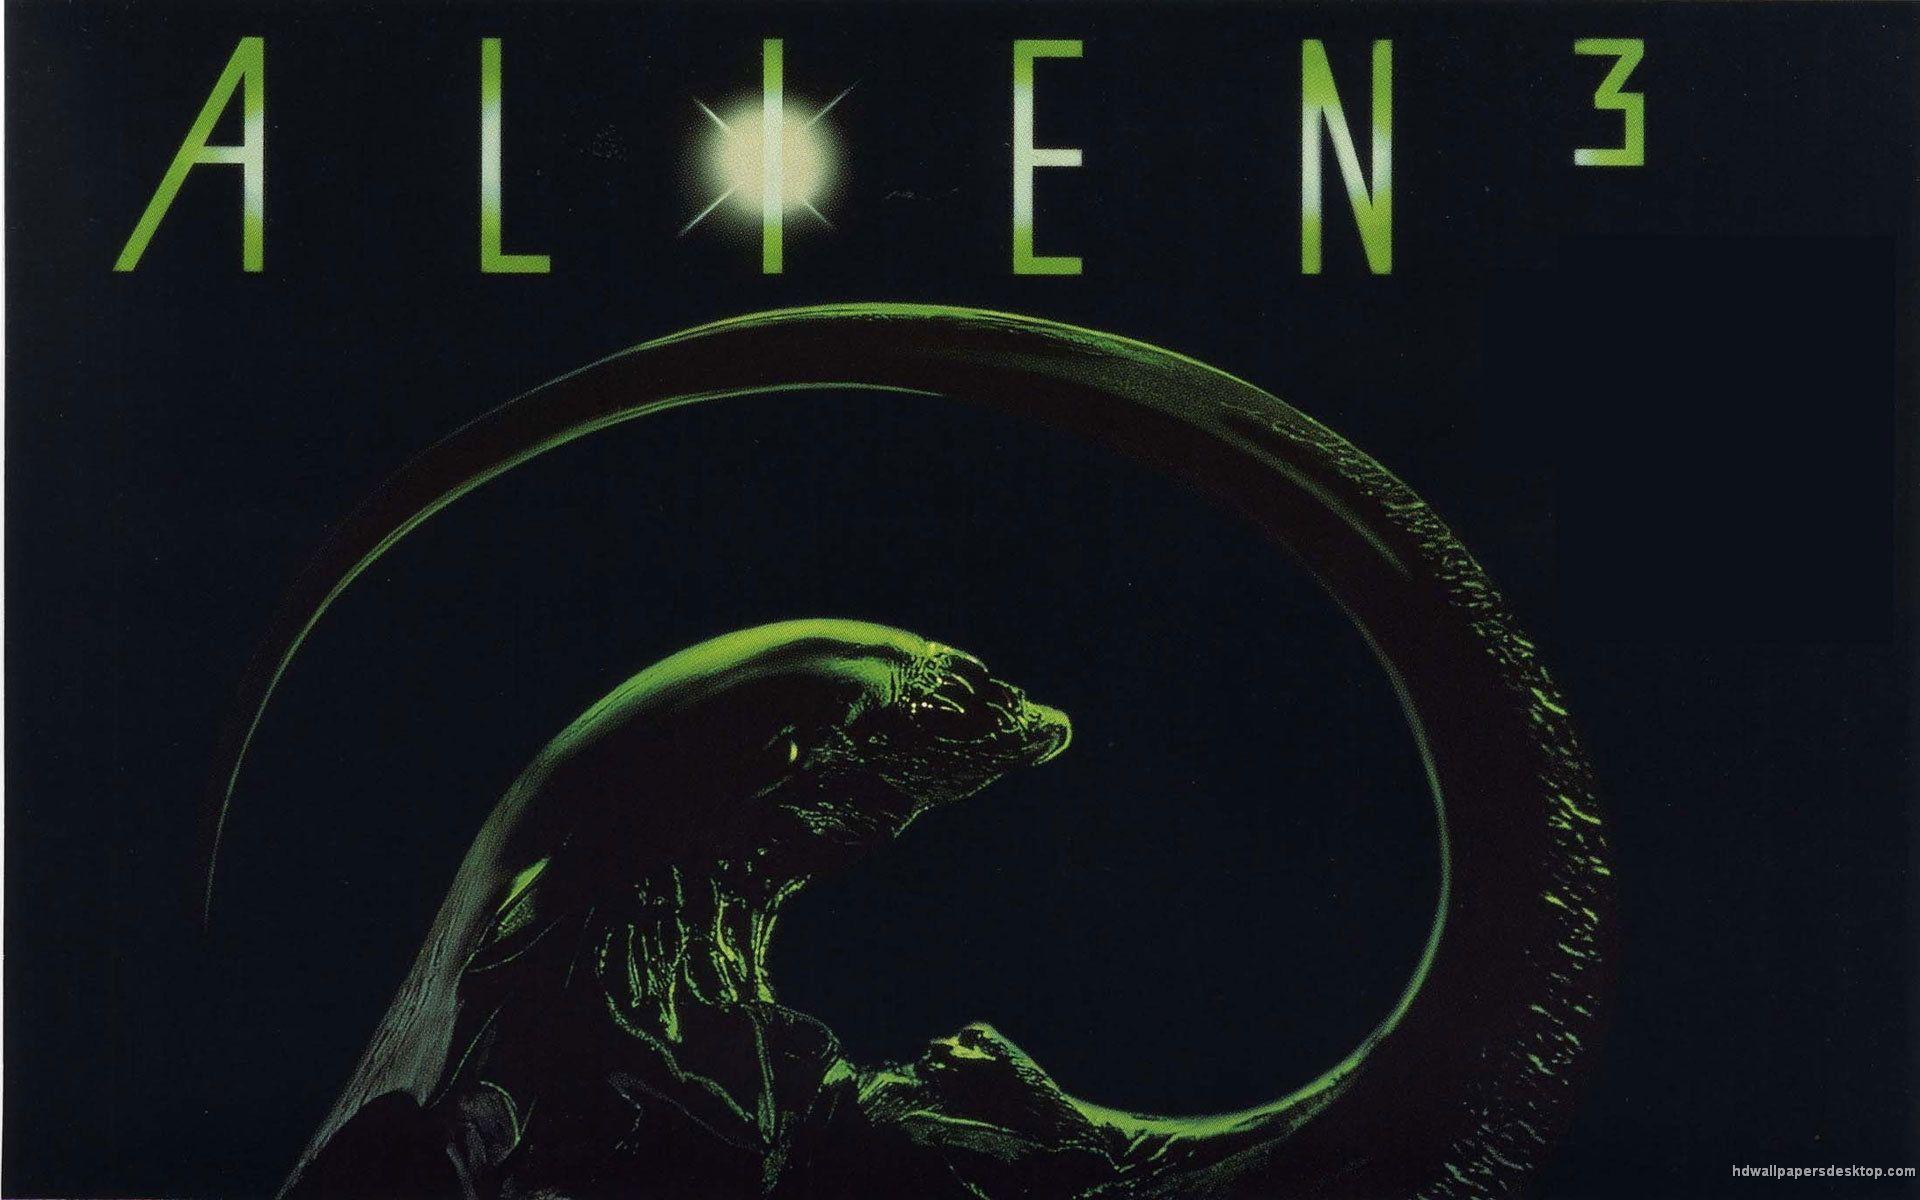 Alien 3 Logo - Bea's Ranting Reviews] Alien 3 [1992] by Bea Harper | The Super Network